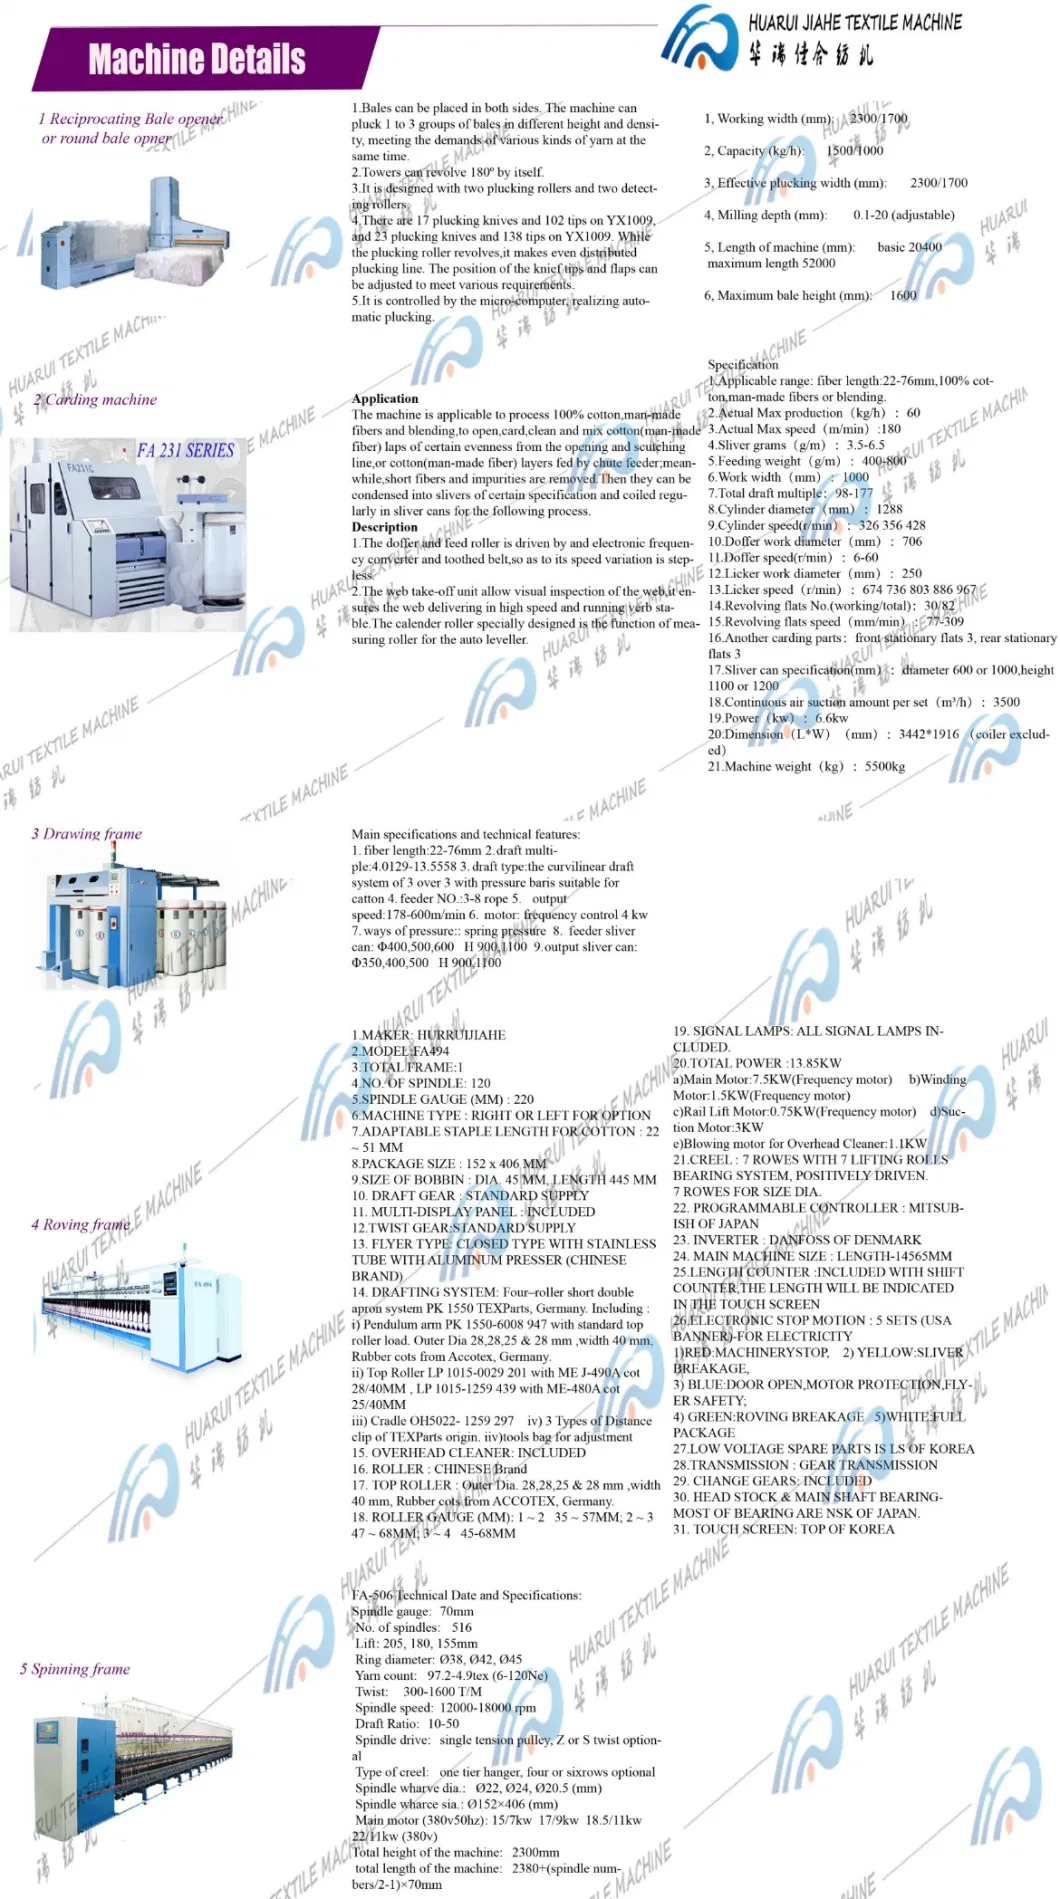 Chinese Supplier Cotton Yarn Dyeing Equipment Machine One Stop Yarn Dyeing Solution, Vat Dye Huge Dye Vat